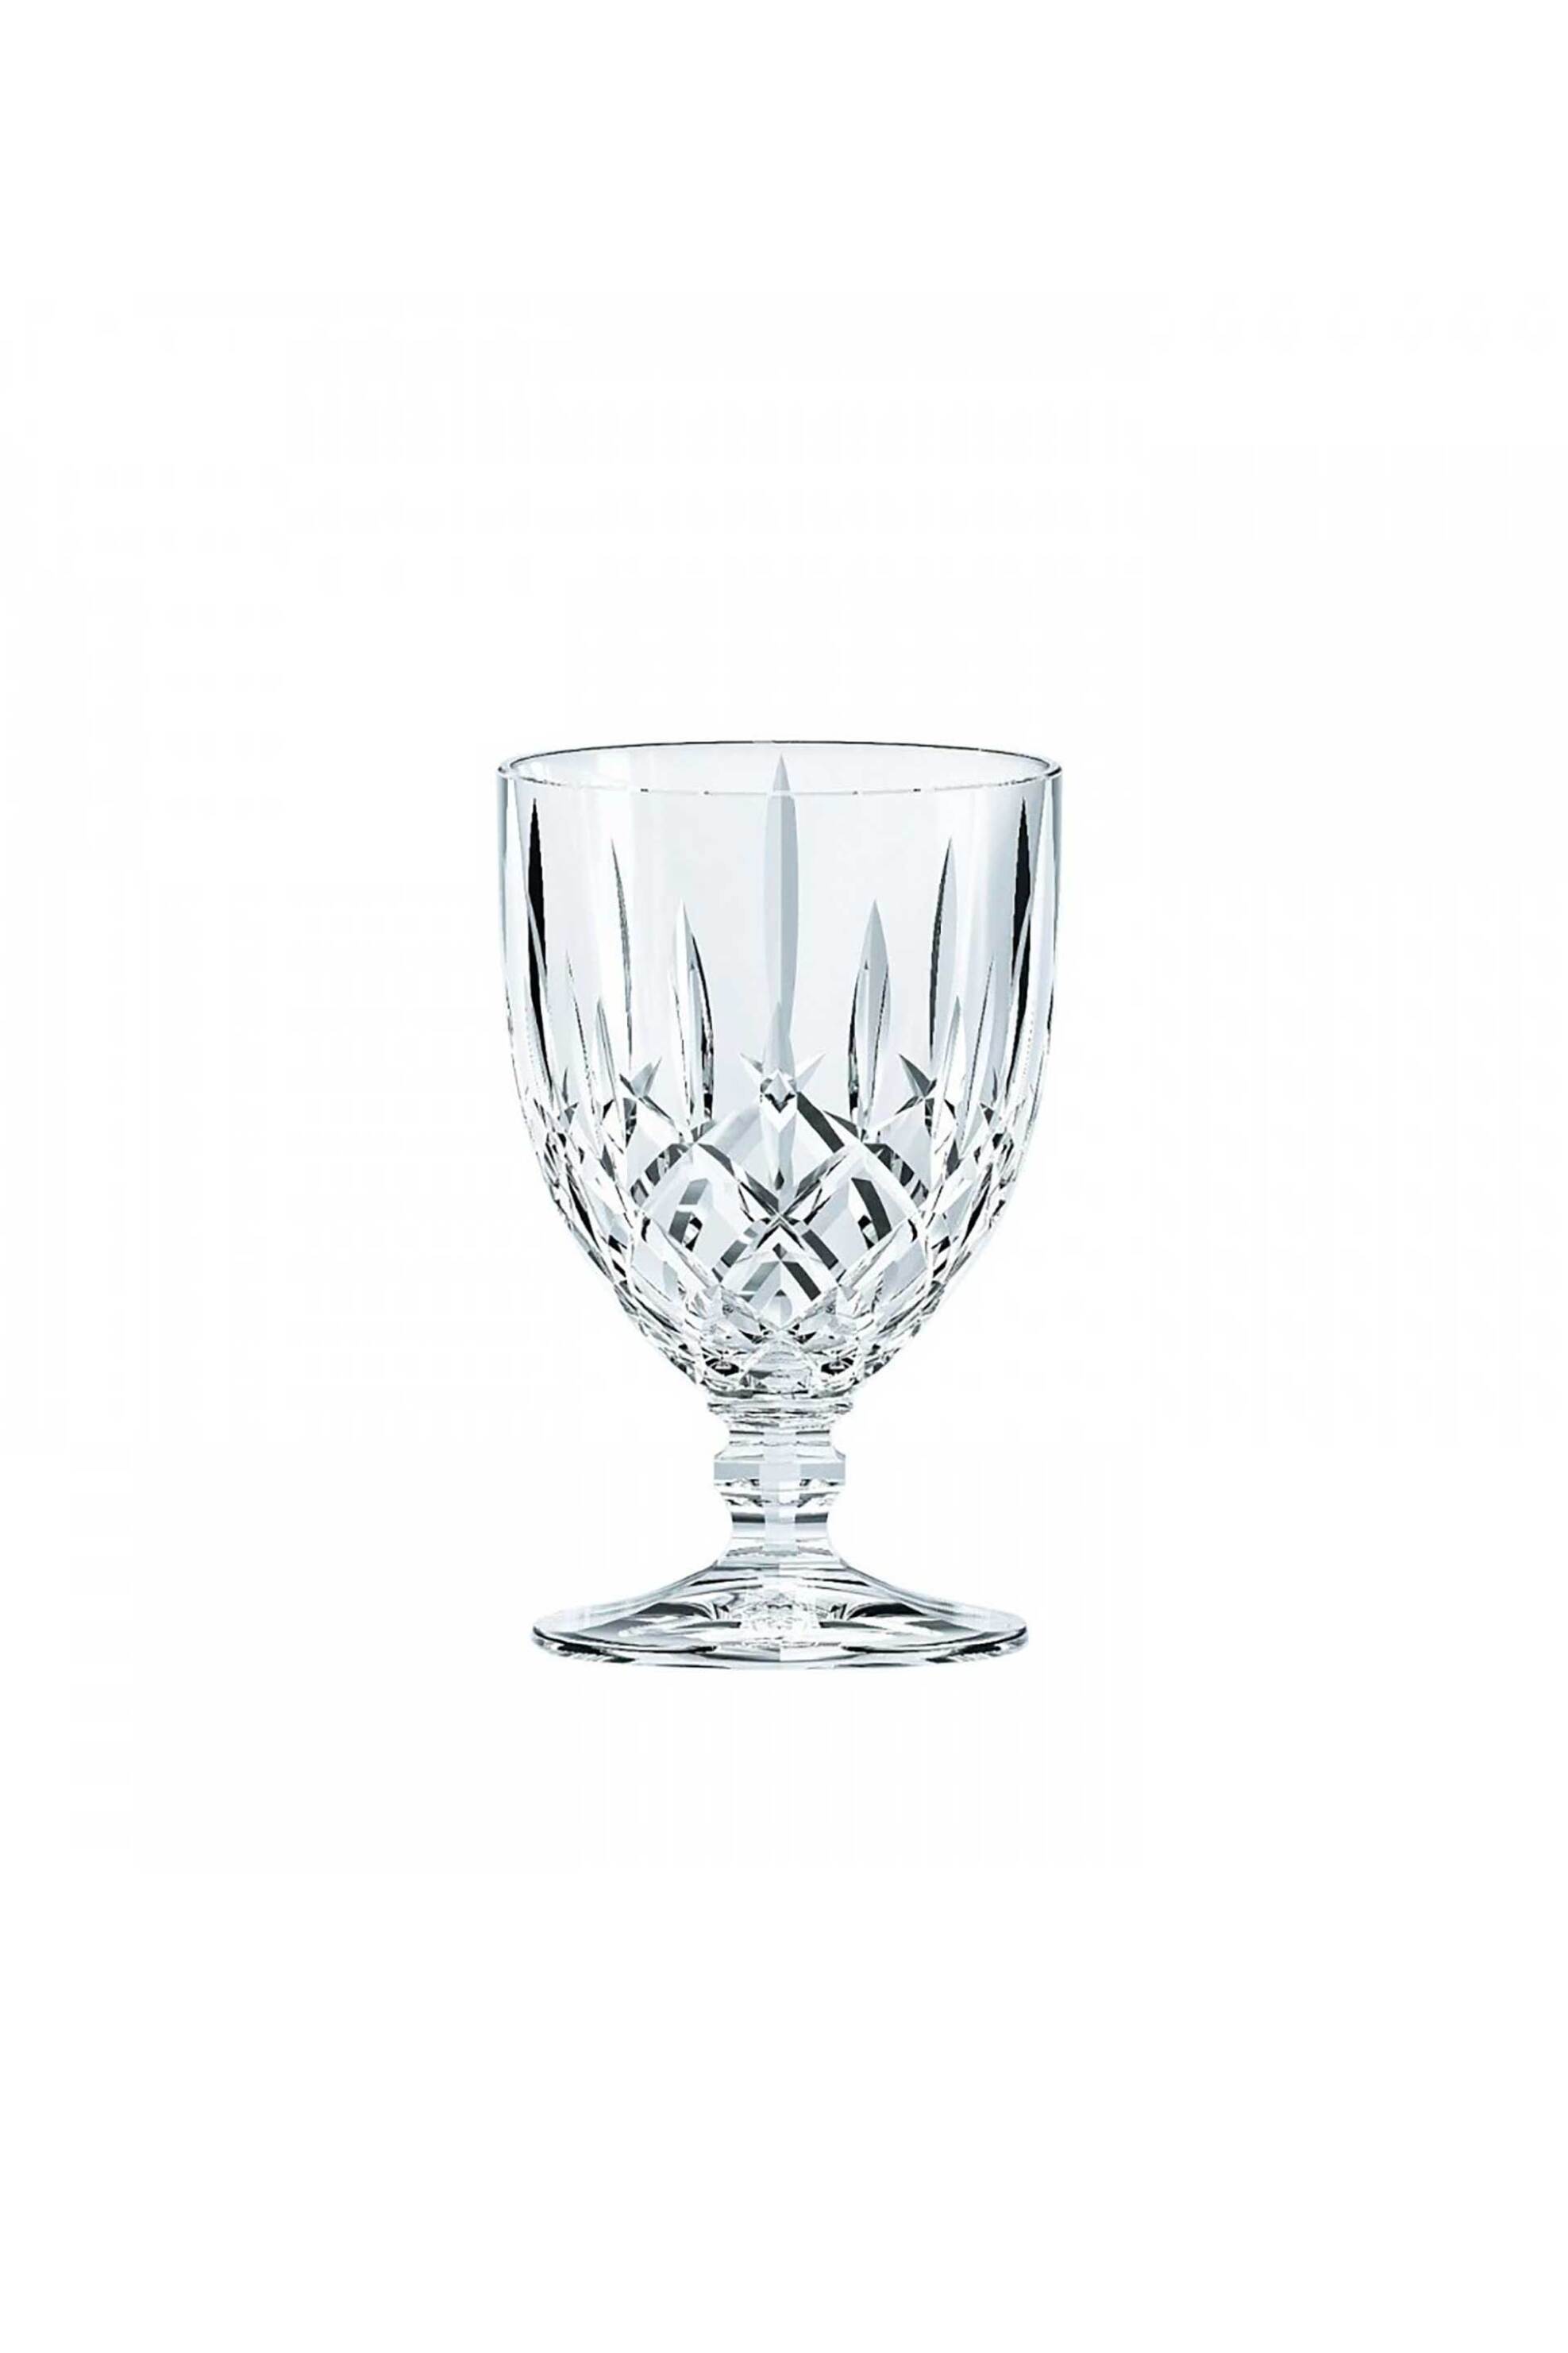 Home > ΚΟΥΖΙΝΑ > Υαλικά > Ποτήρια Nachtmann σετ κρυστάλλινα ποτήρια νερού με ανάγλυφο σχέδιο "Noblesse" 350 ml - 101966